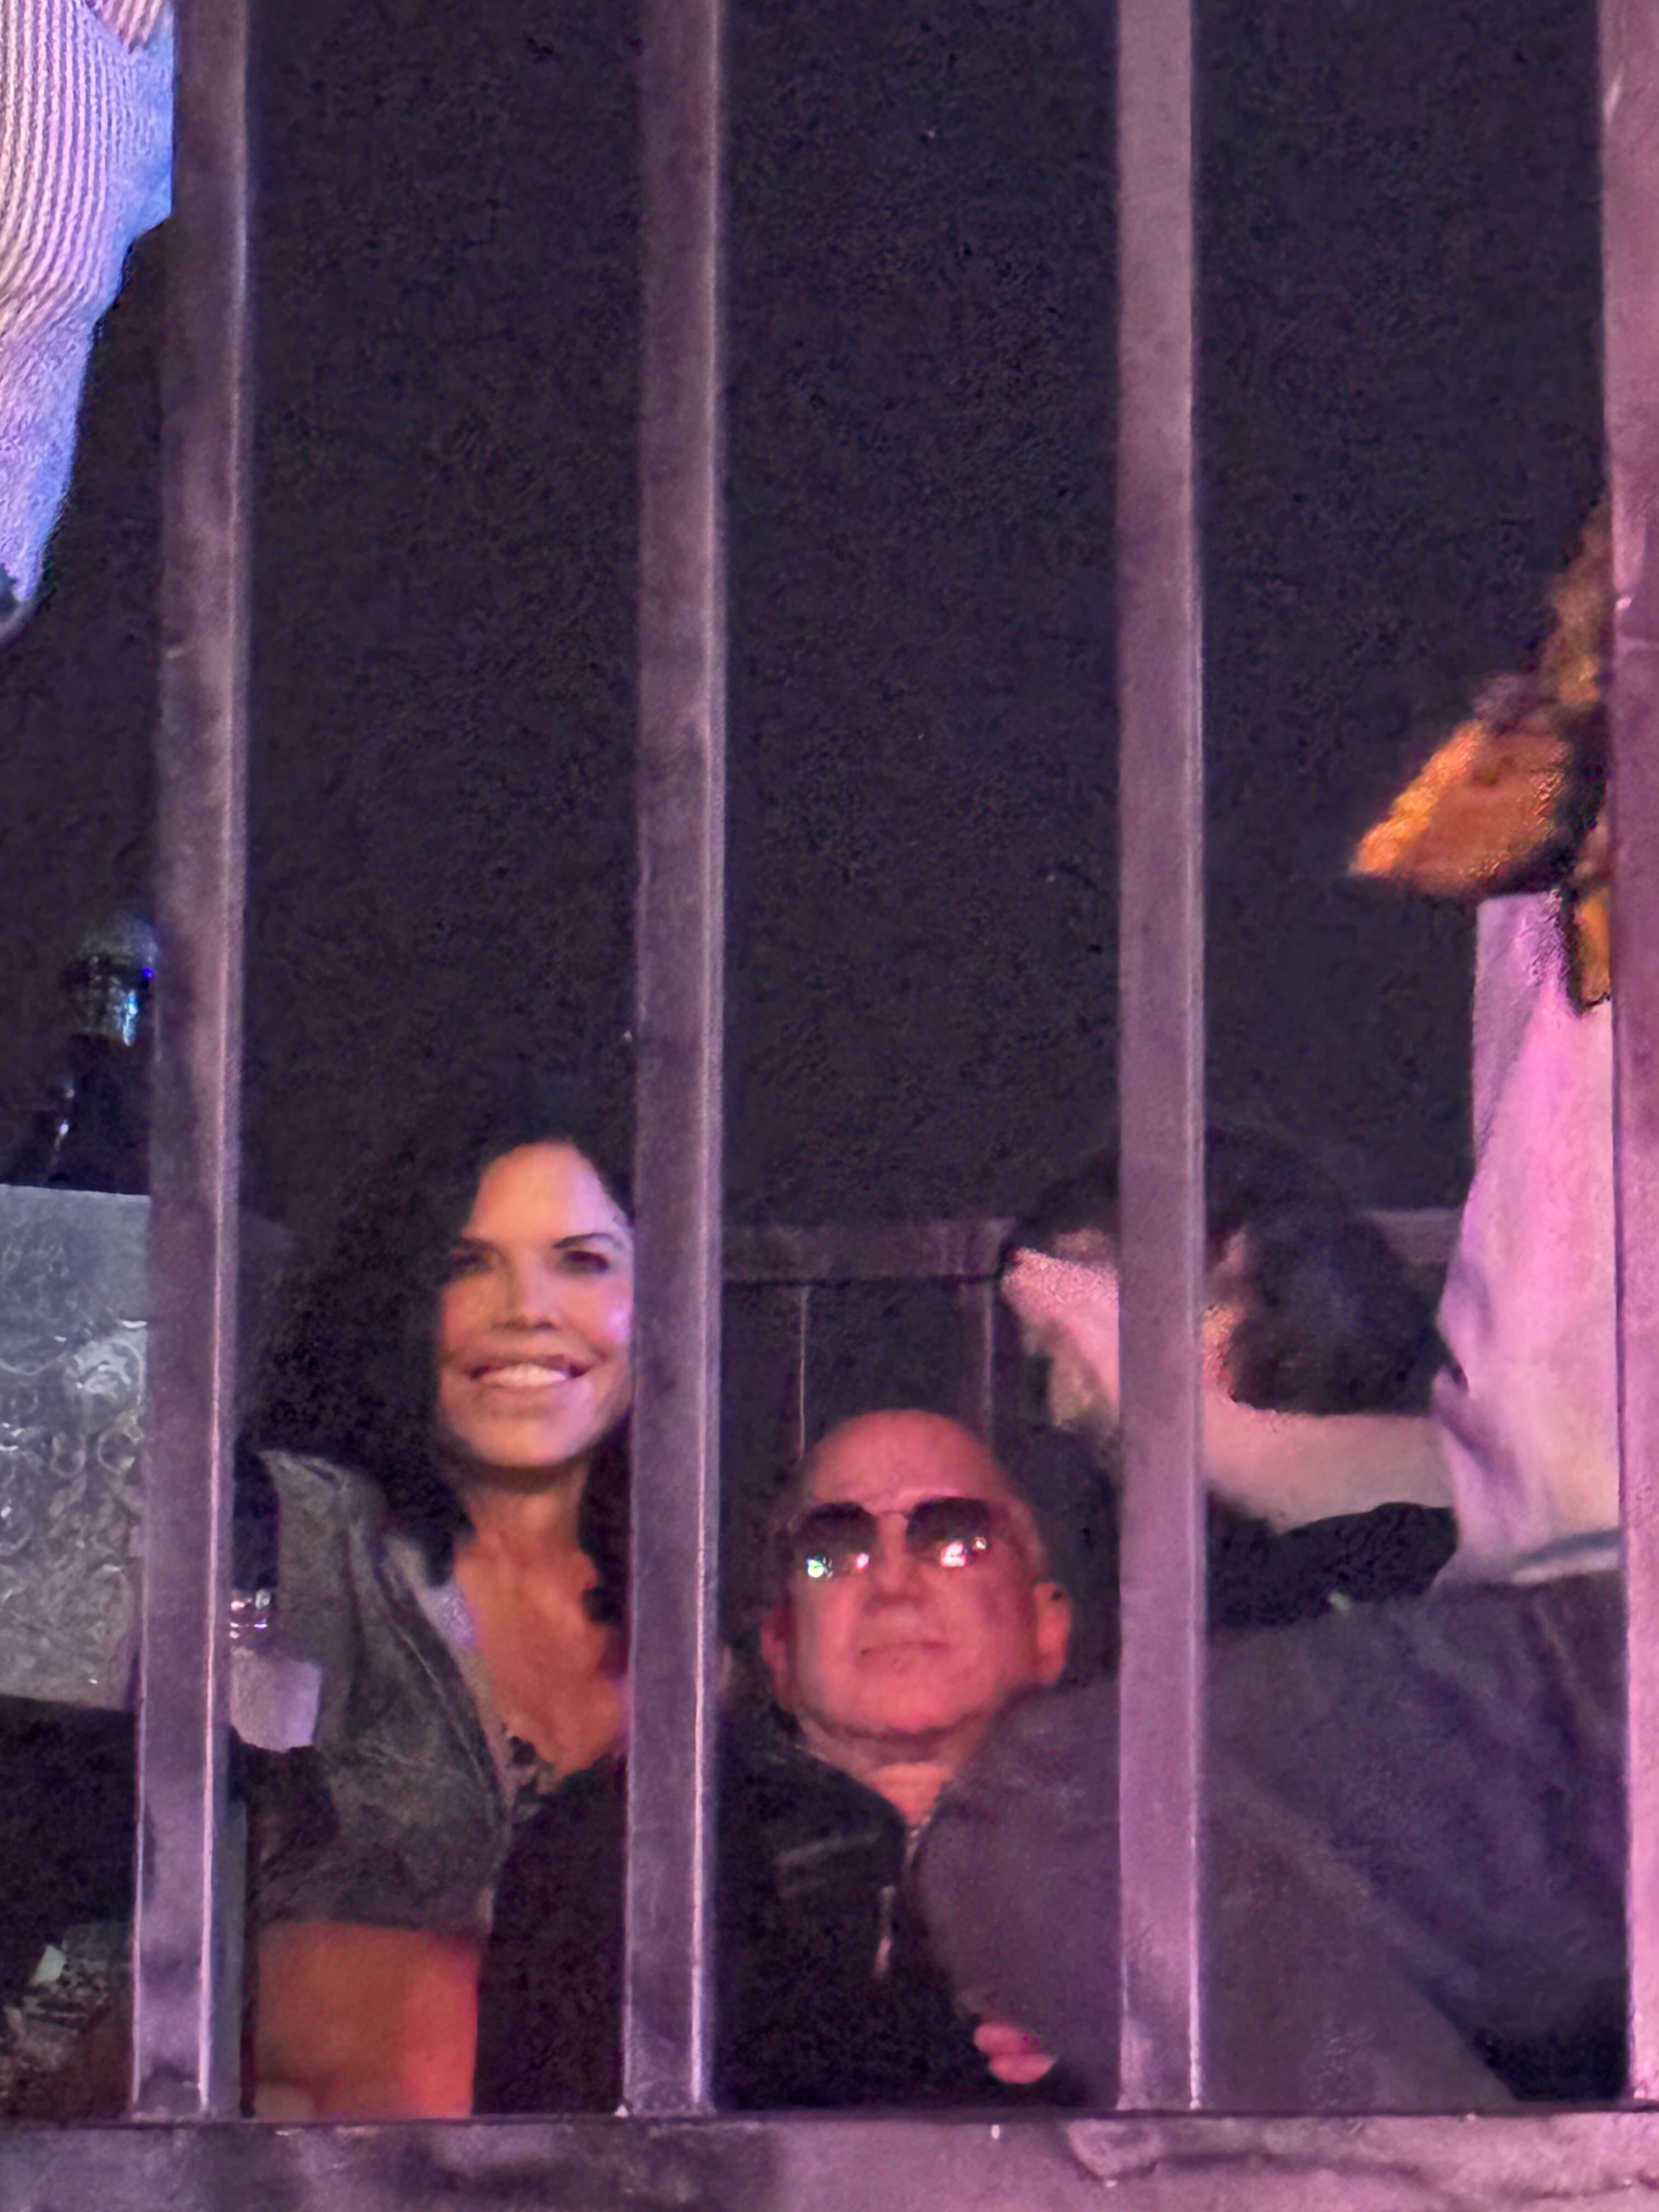 Jeff Bezos and Lauren Sanchez left Neon Carnival before the VIP platform was cleared